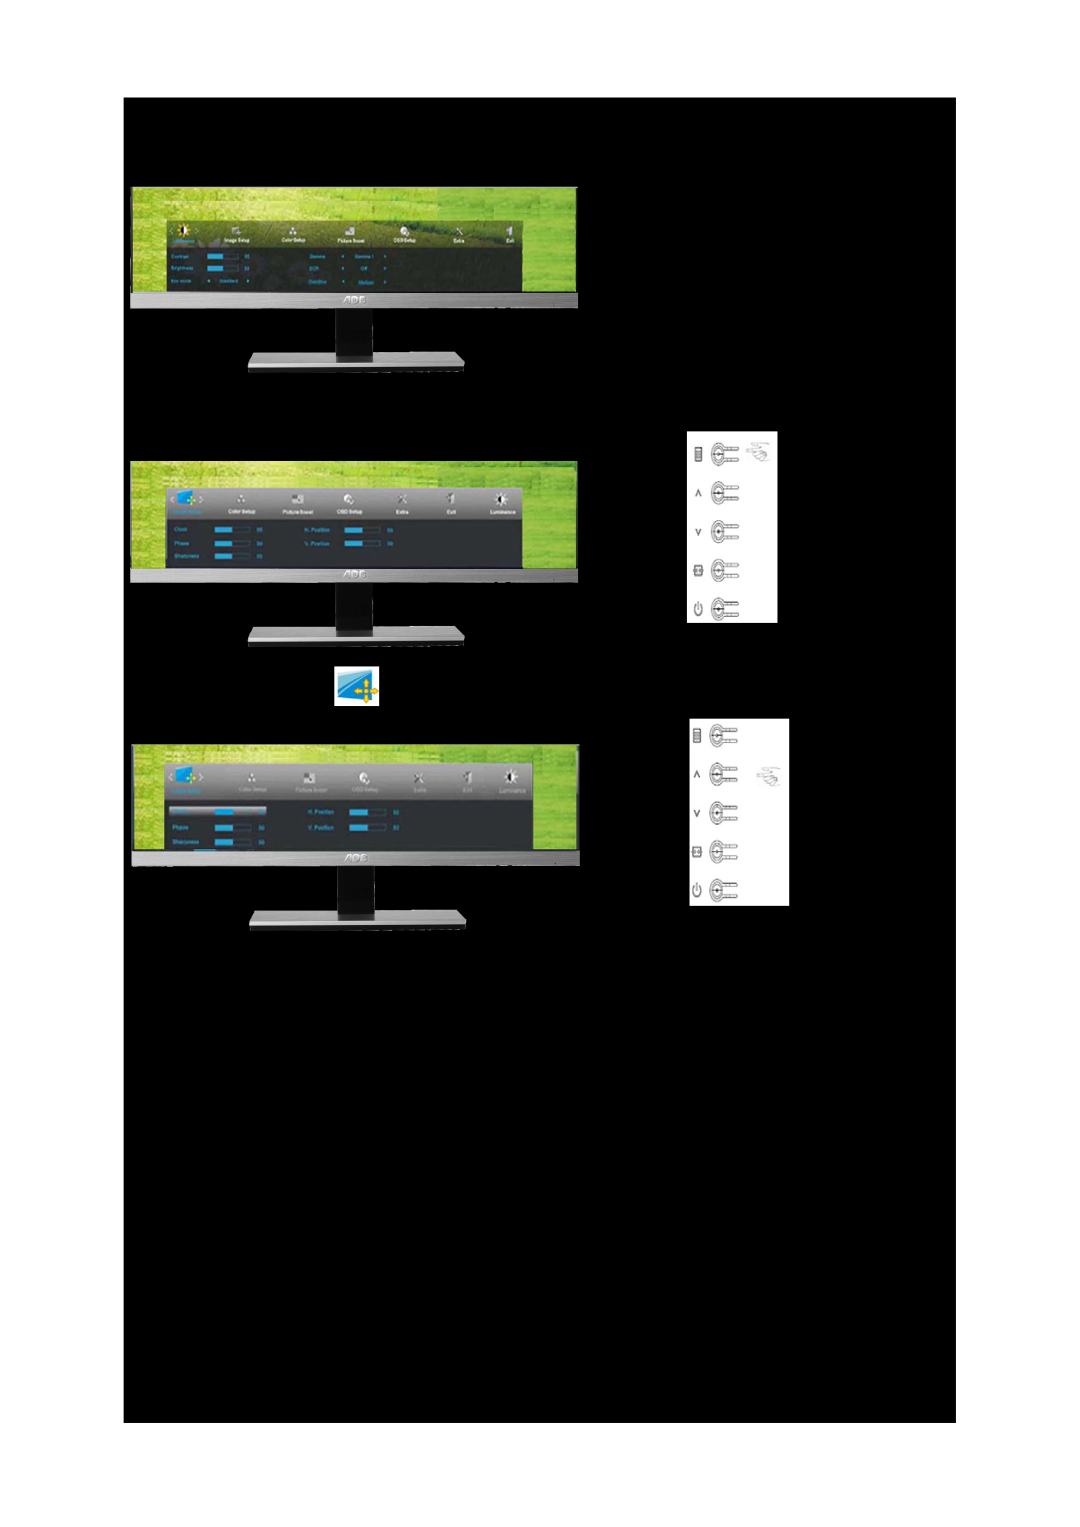 AOC D2267PW, D2367P Press MENU Menu to display menu, Press ∧or∨ to select Image Setup, and press MENU to enter 